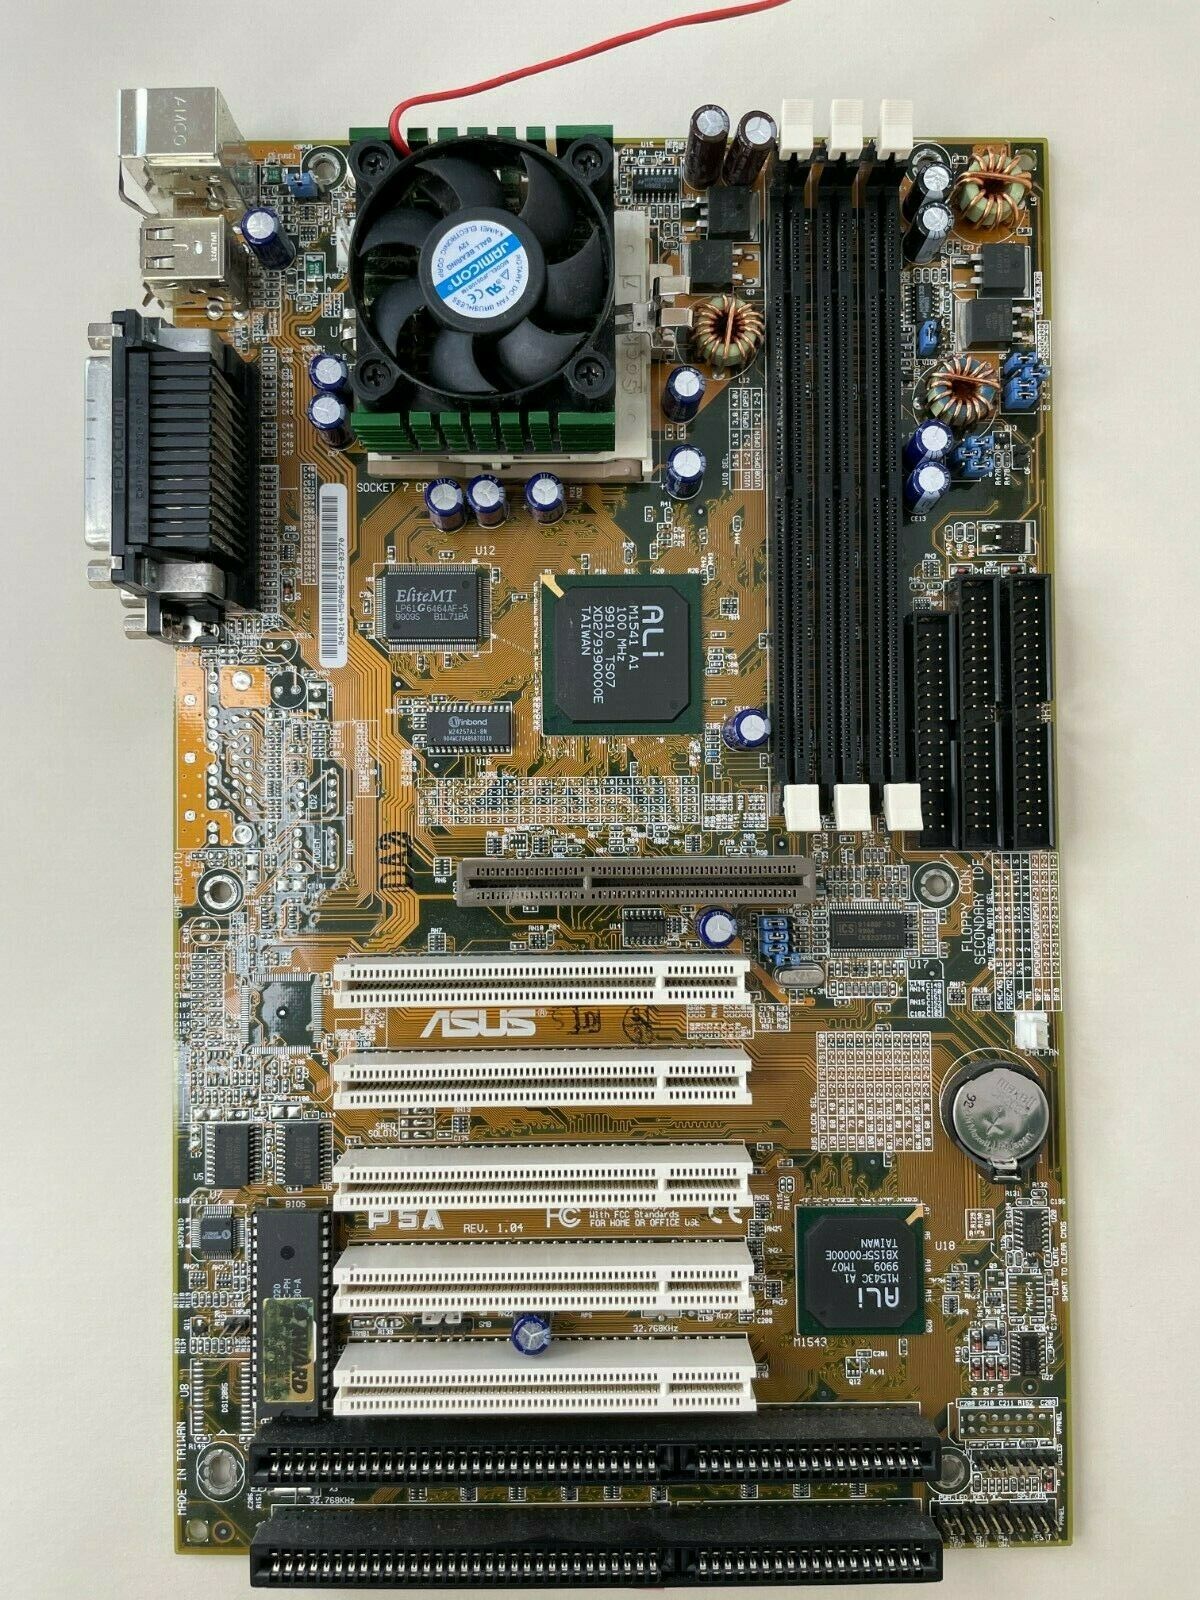 Asus P5a Rev 1.04 With amd-k6-2/400afq Processor